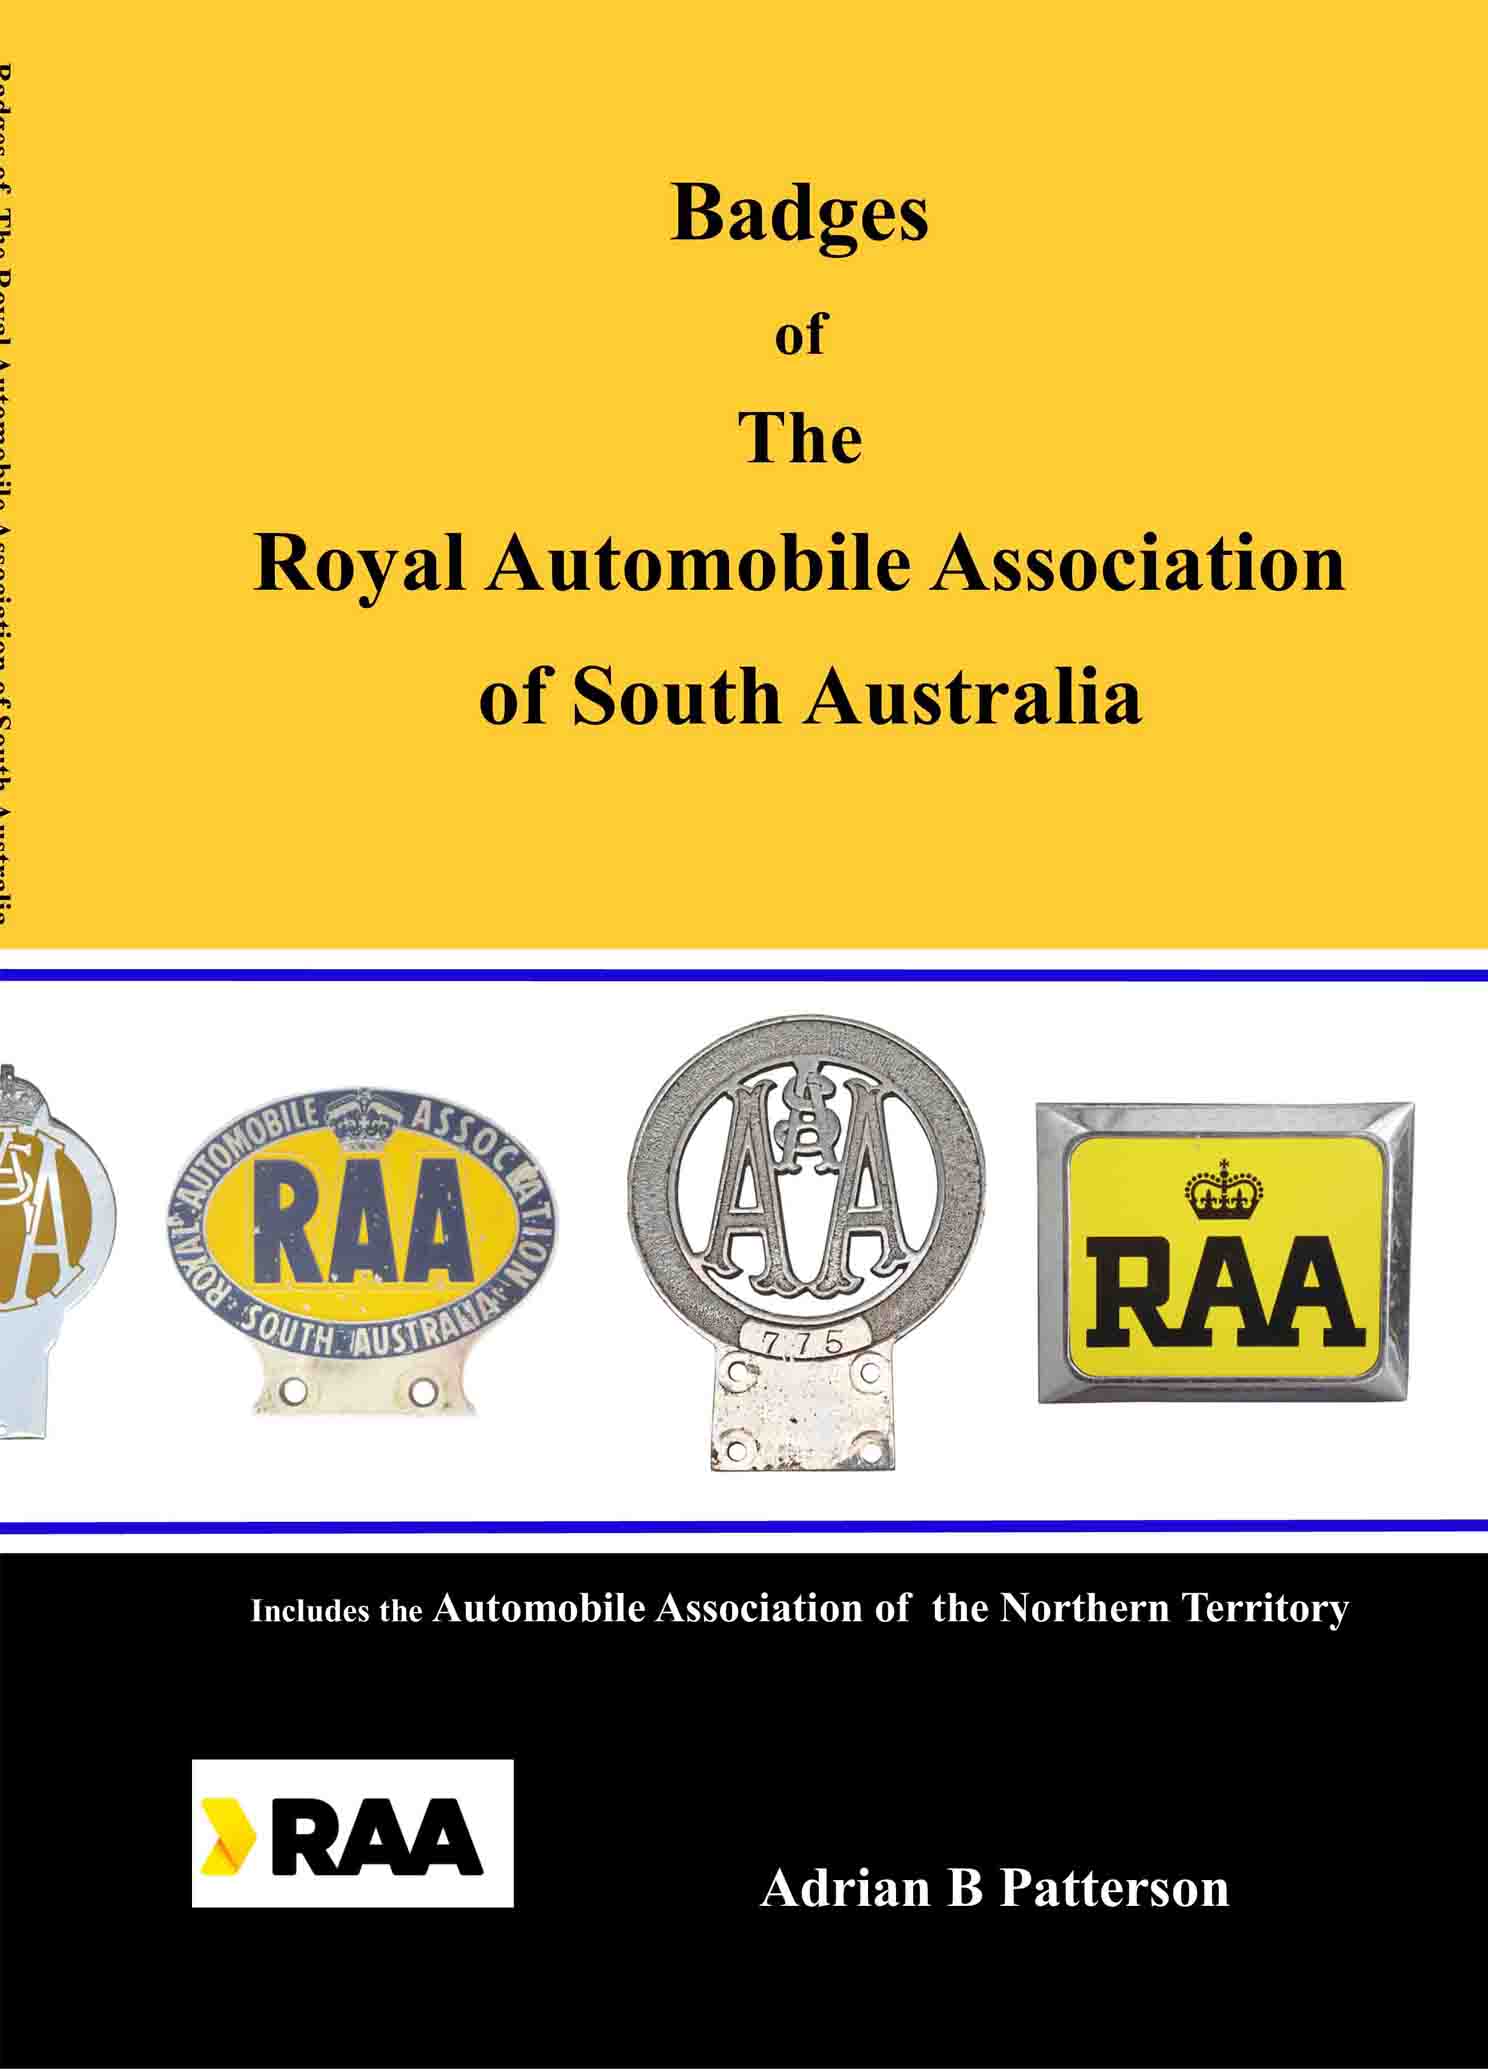 RAA Car Badge cover